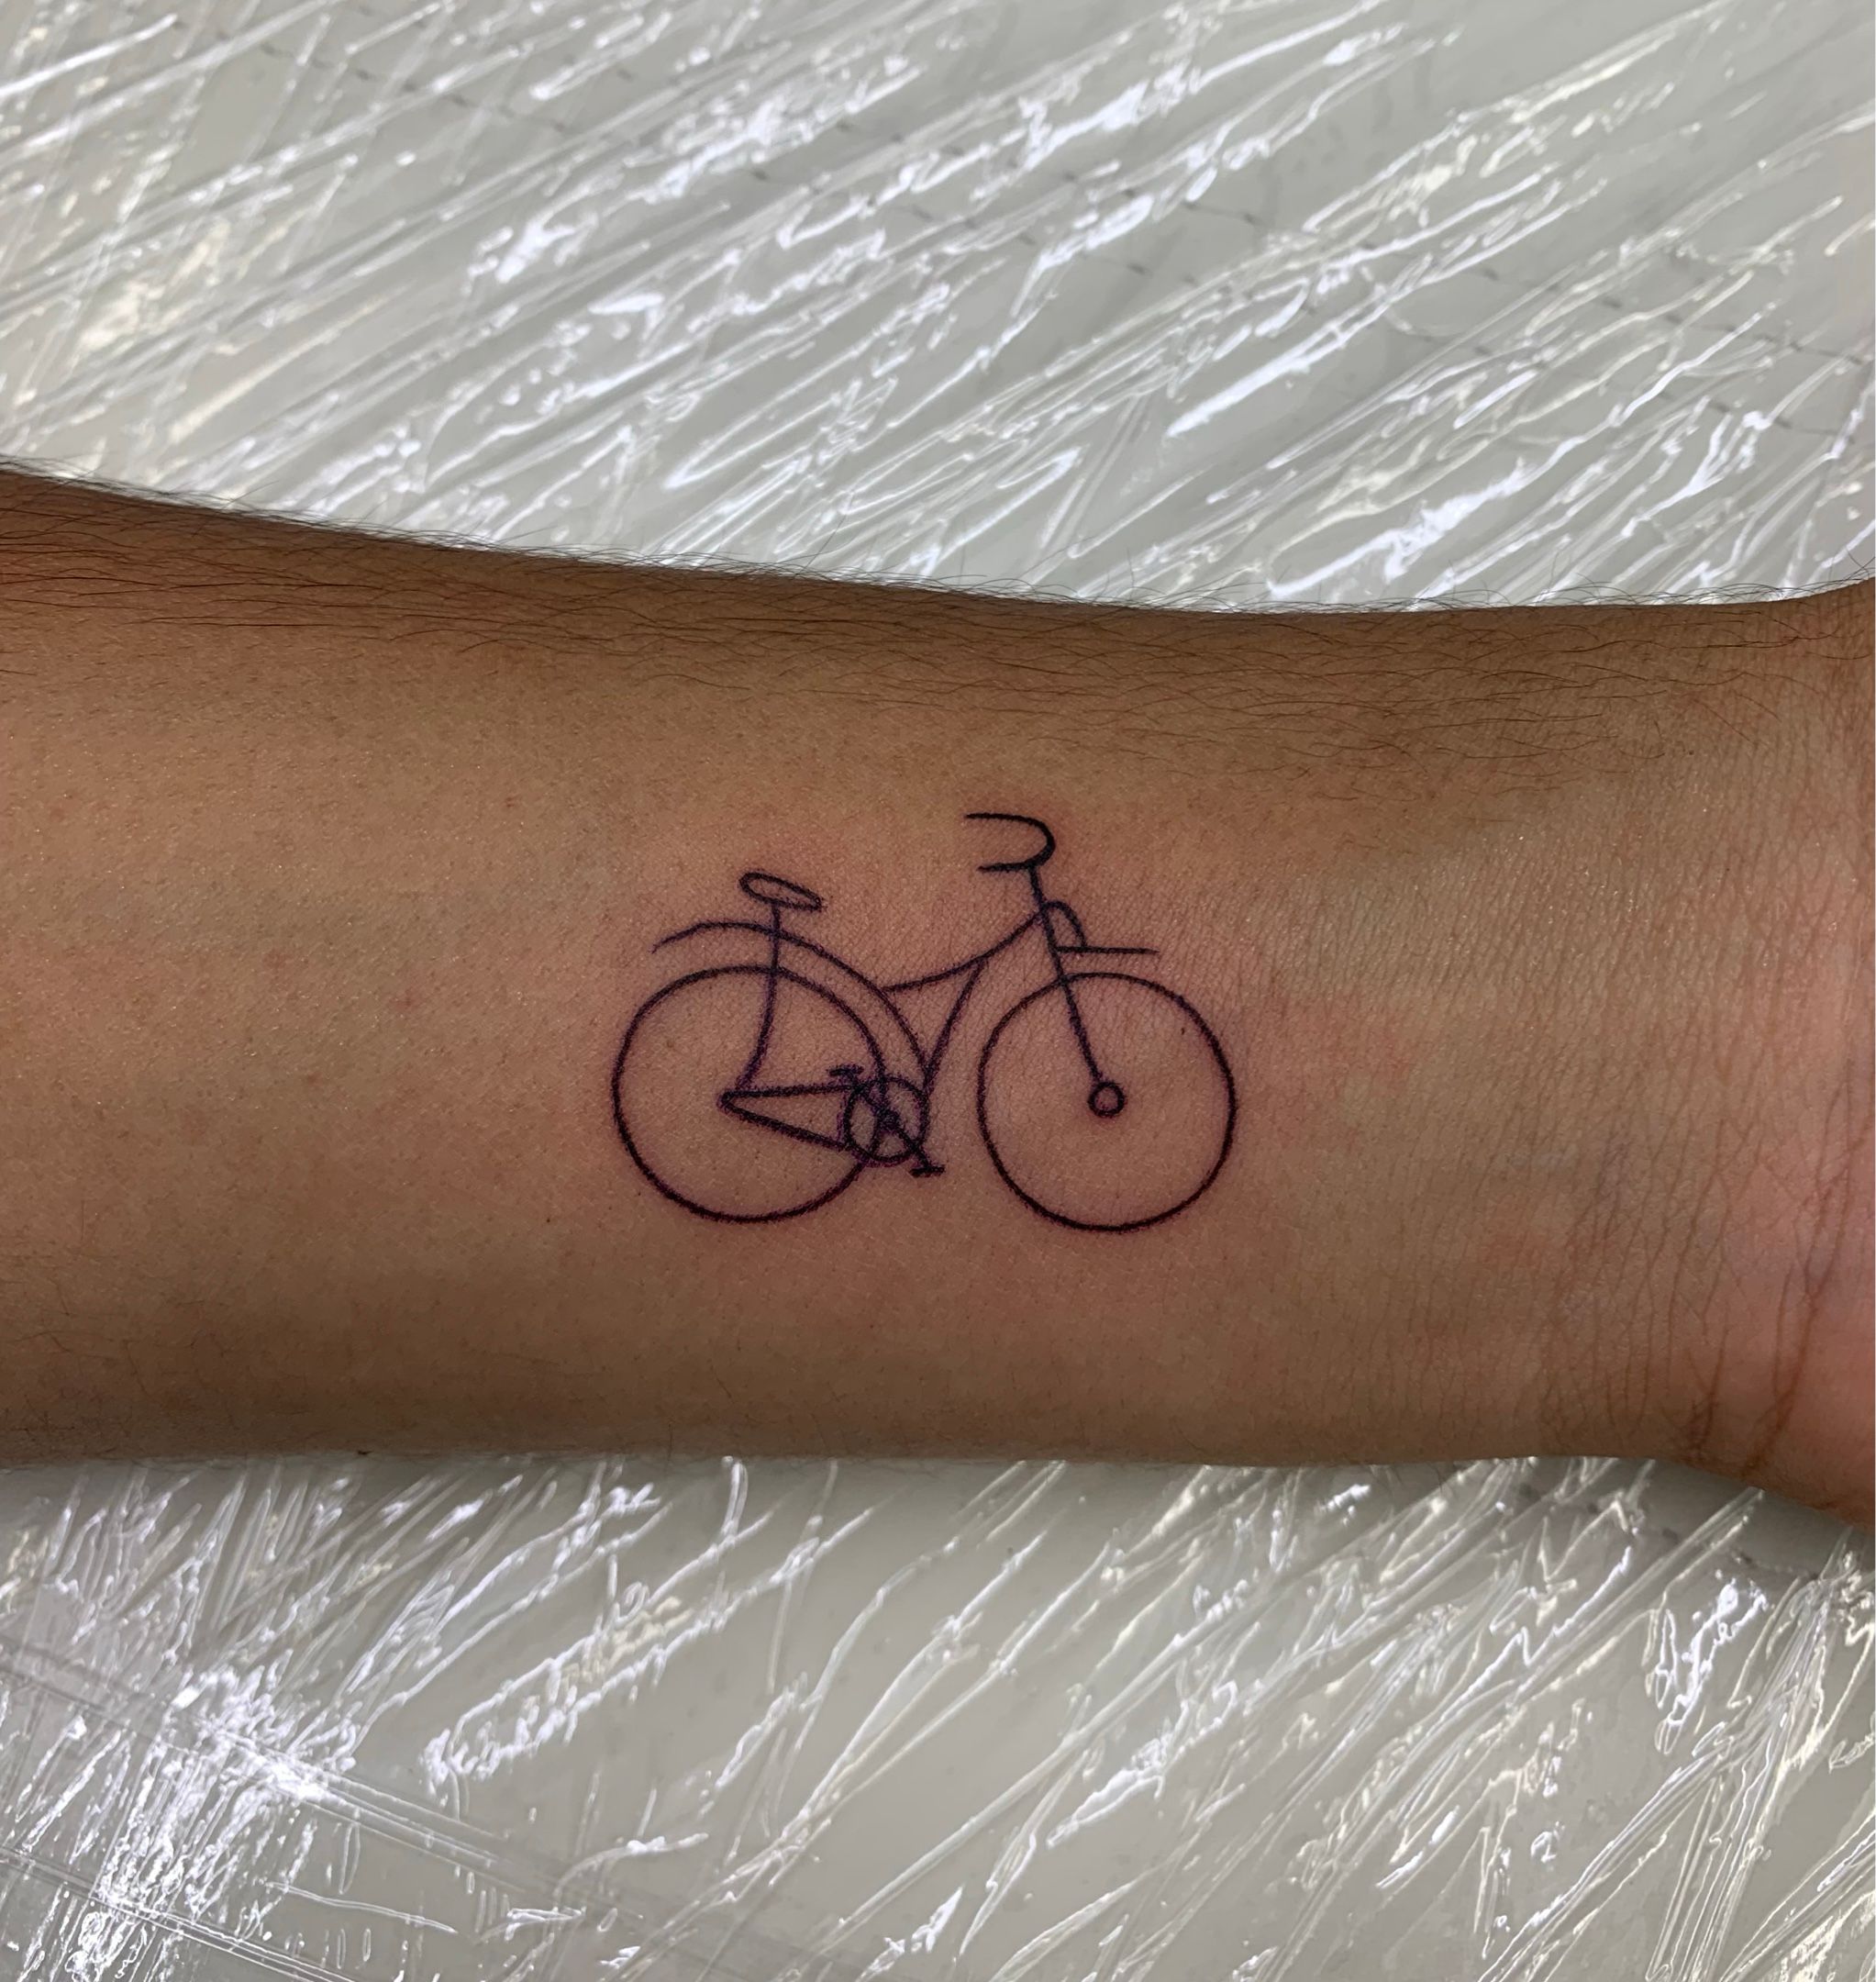 Share 70+ simple bike tattoo latest